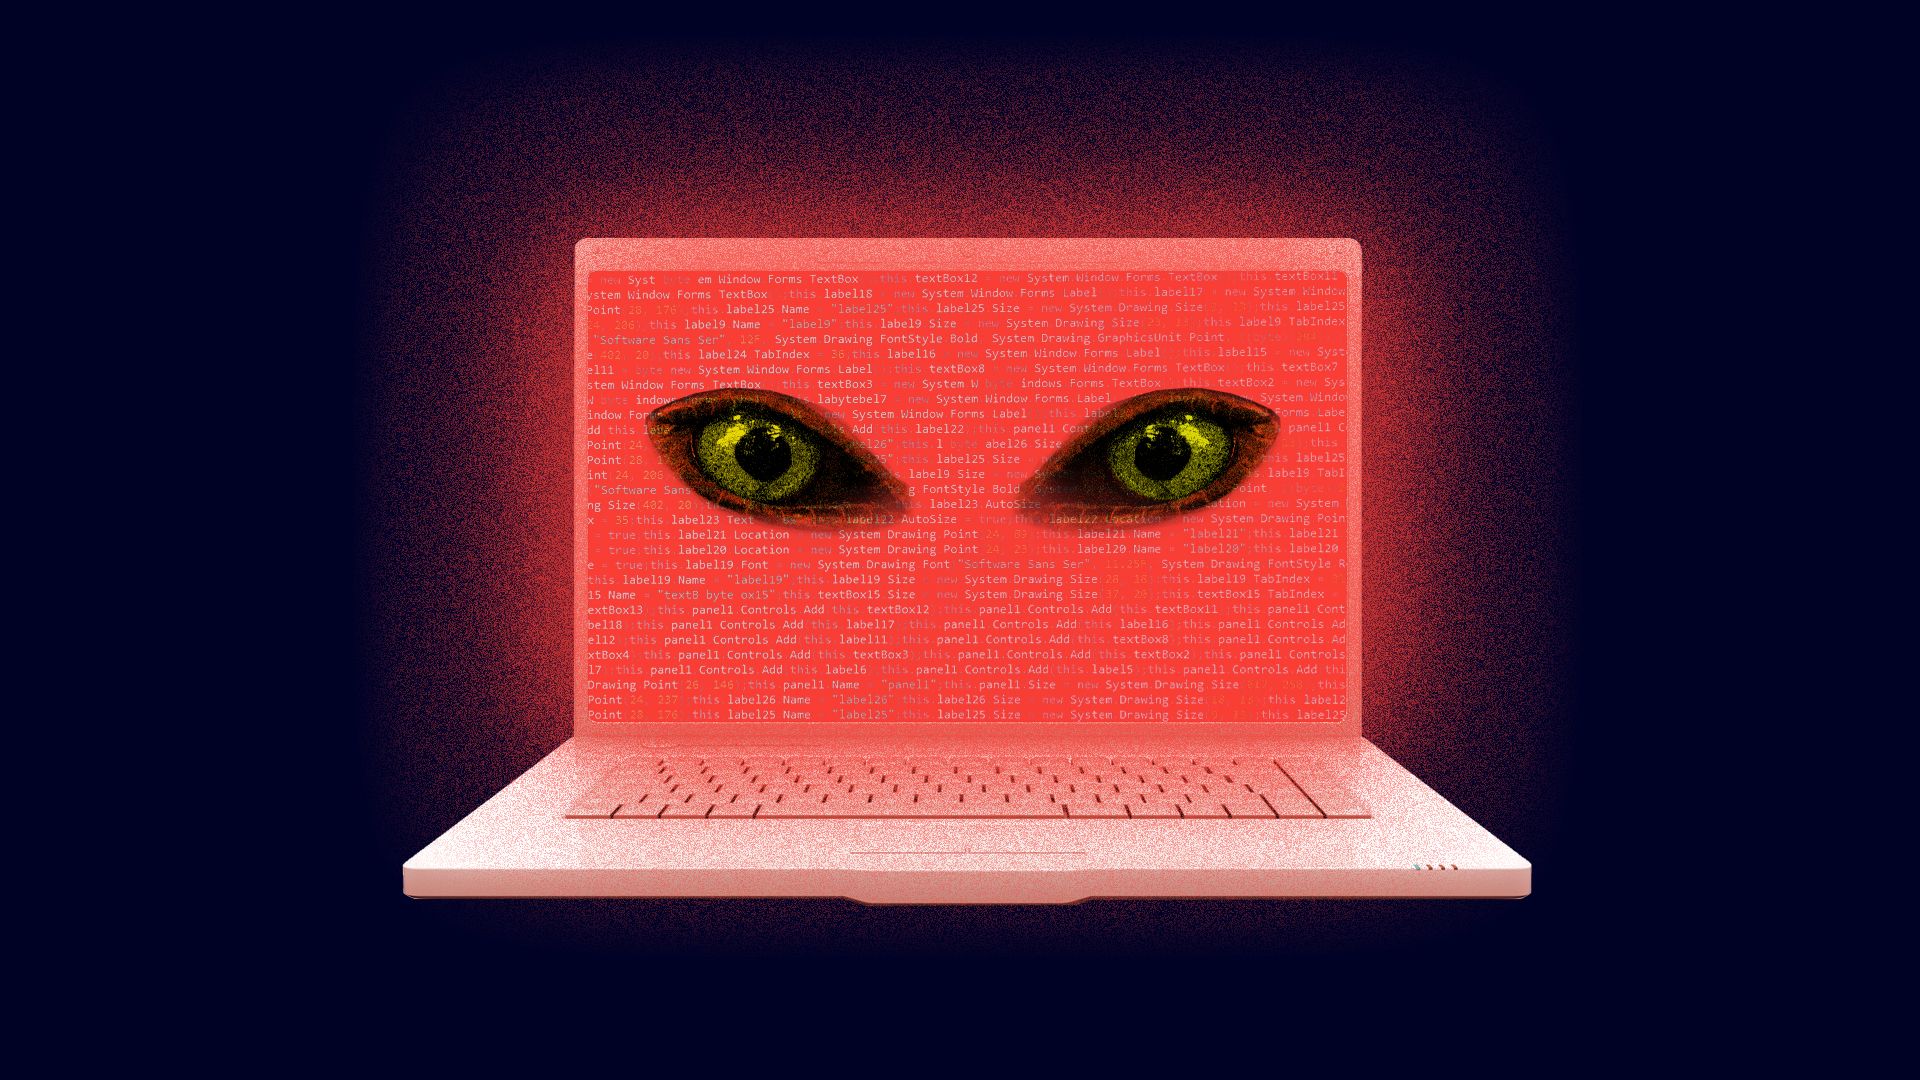 A laptop displays menacing eyes on a red screen.